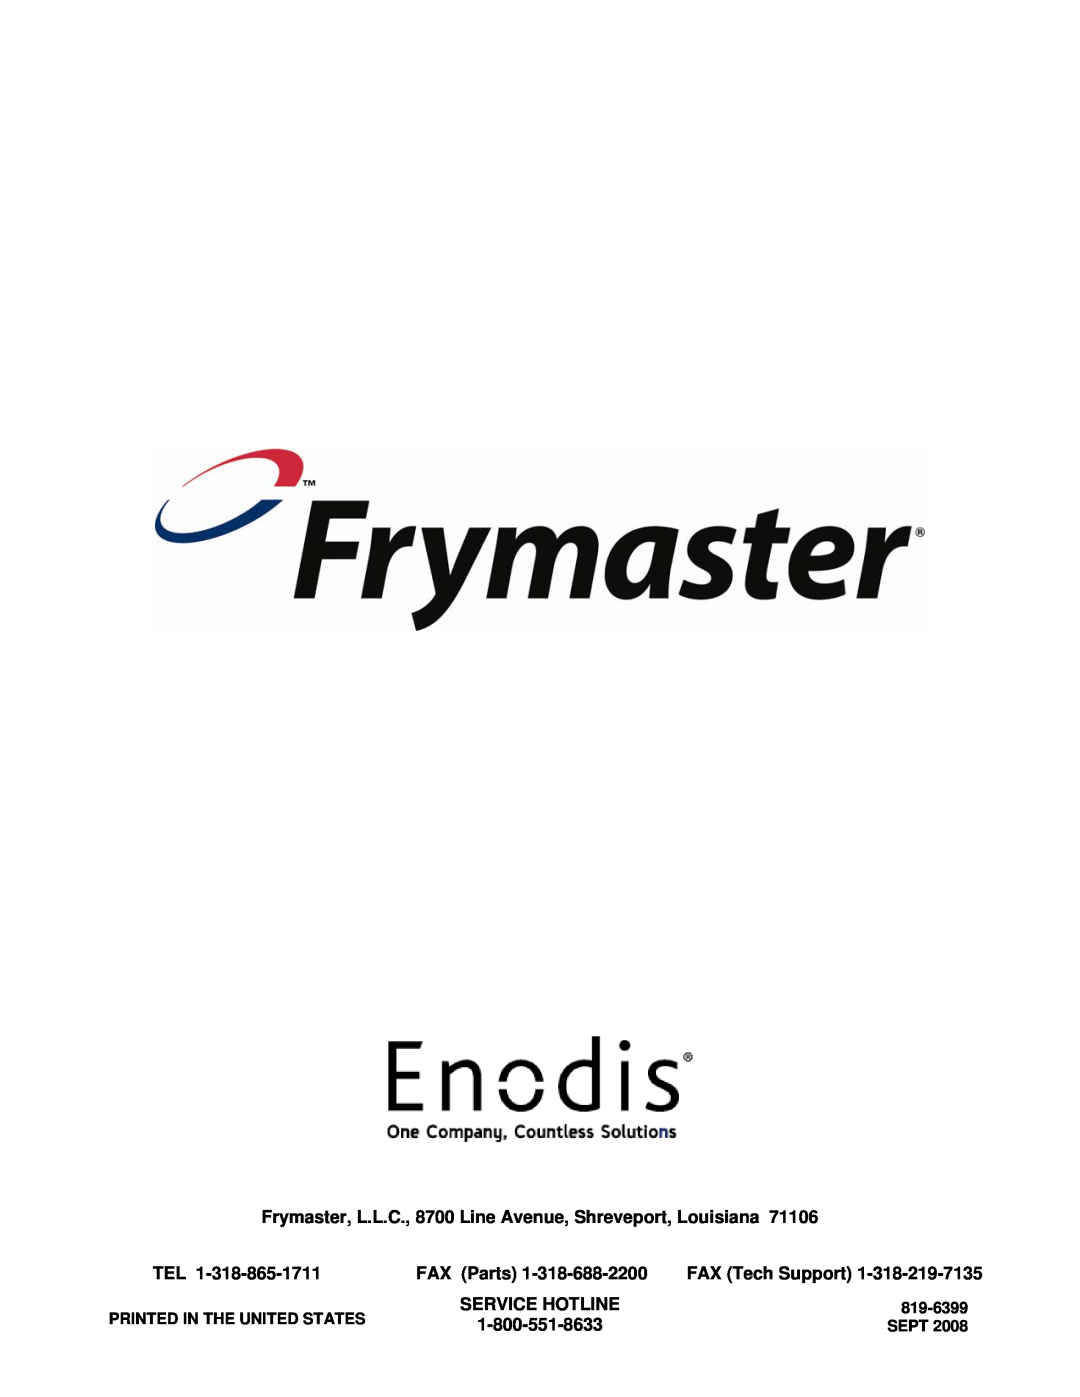 Frymaster FE155 Frymaster, L.L.C., 8700 Line Avenue, Shreveport, Louisiana, FAX Parts, FAX Tech Support, Service Hotline 